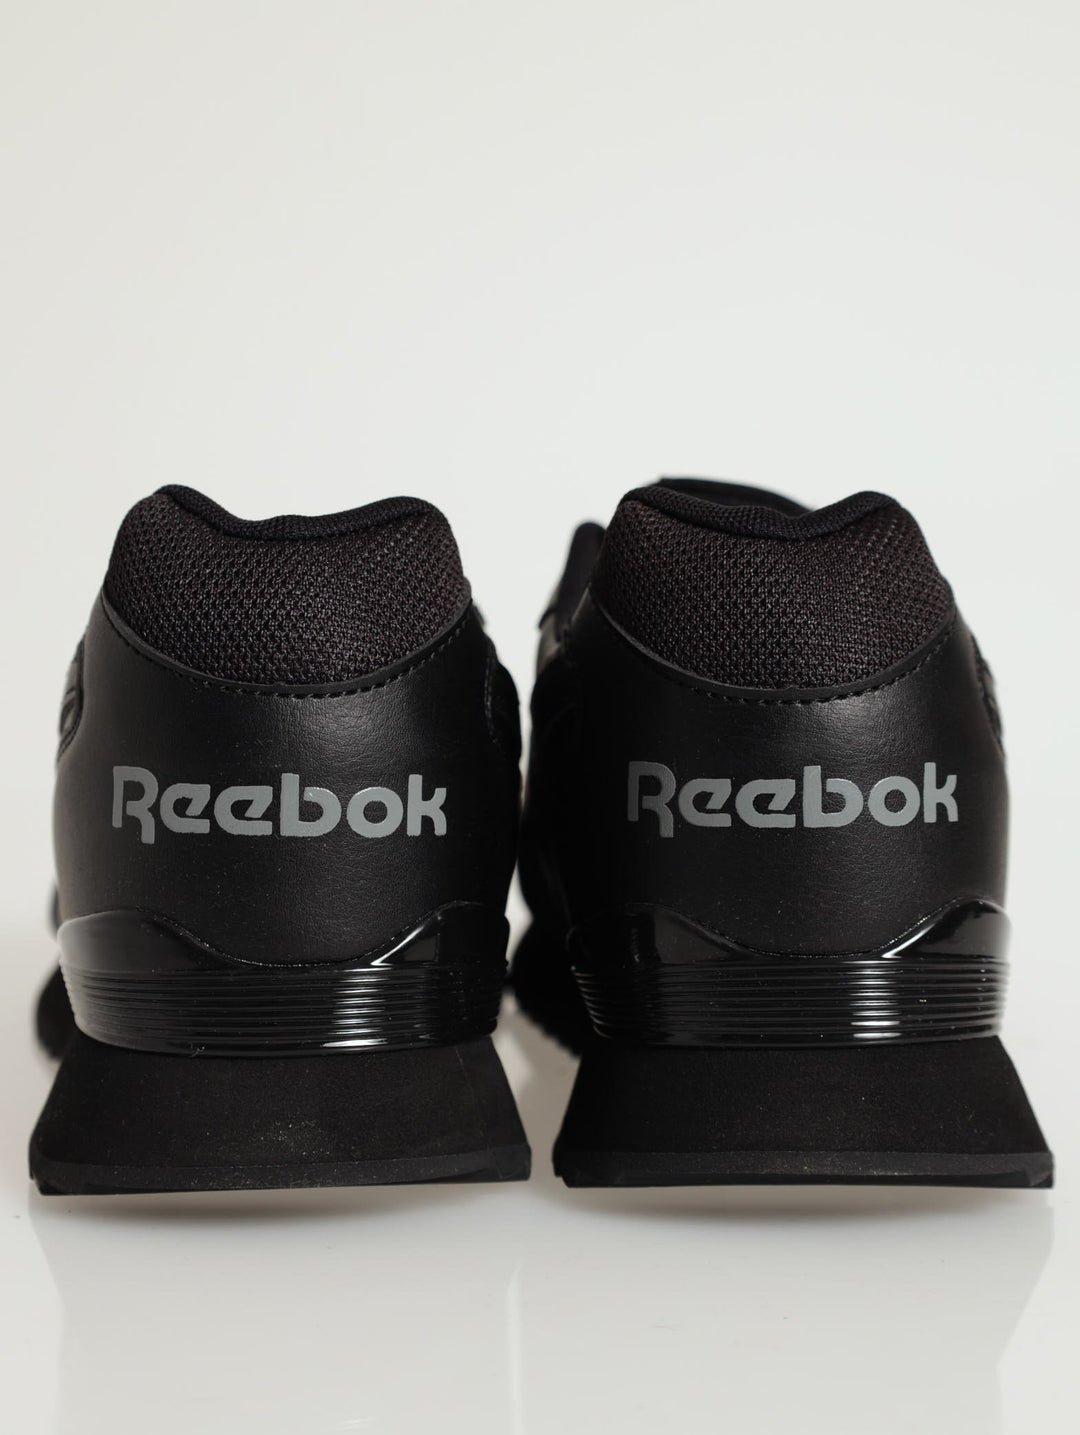 Glide Ripple Clip Track Sole Closed Toe Lace Up Sneaker - Black